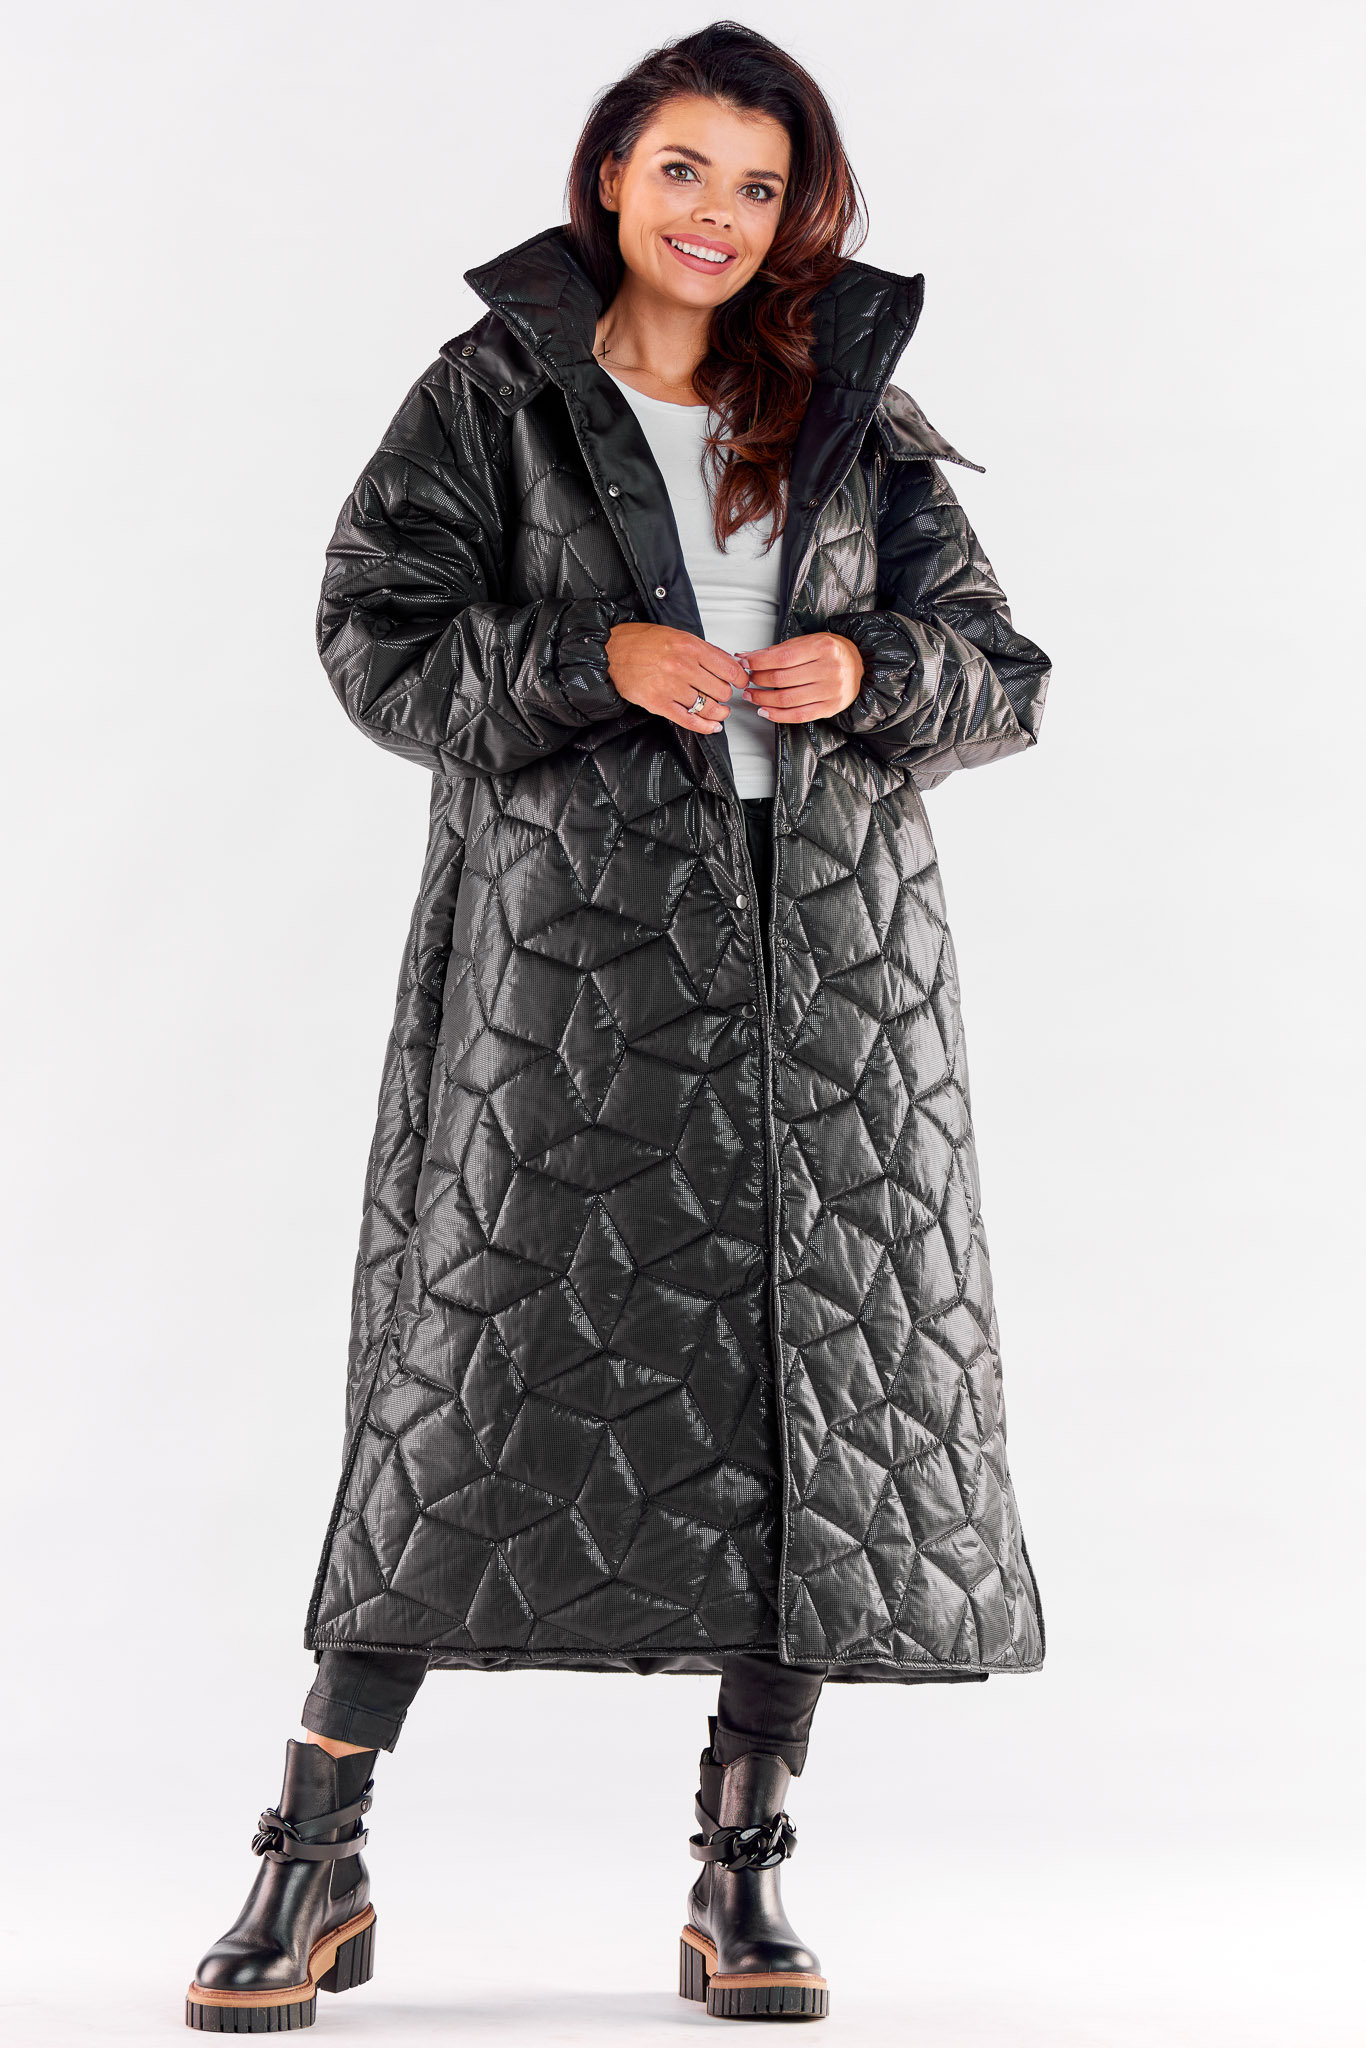  Coat model 173889 awama  black